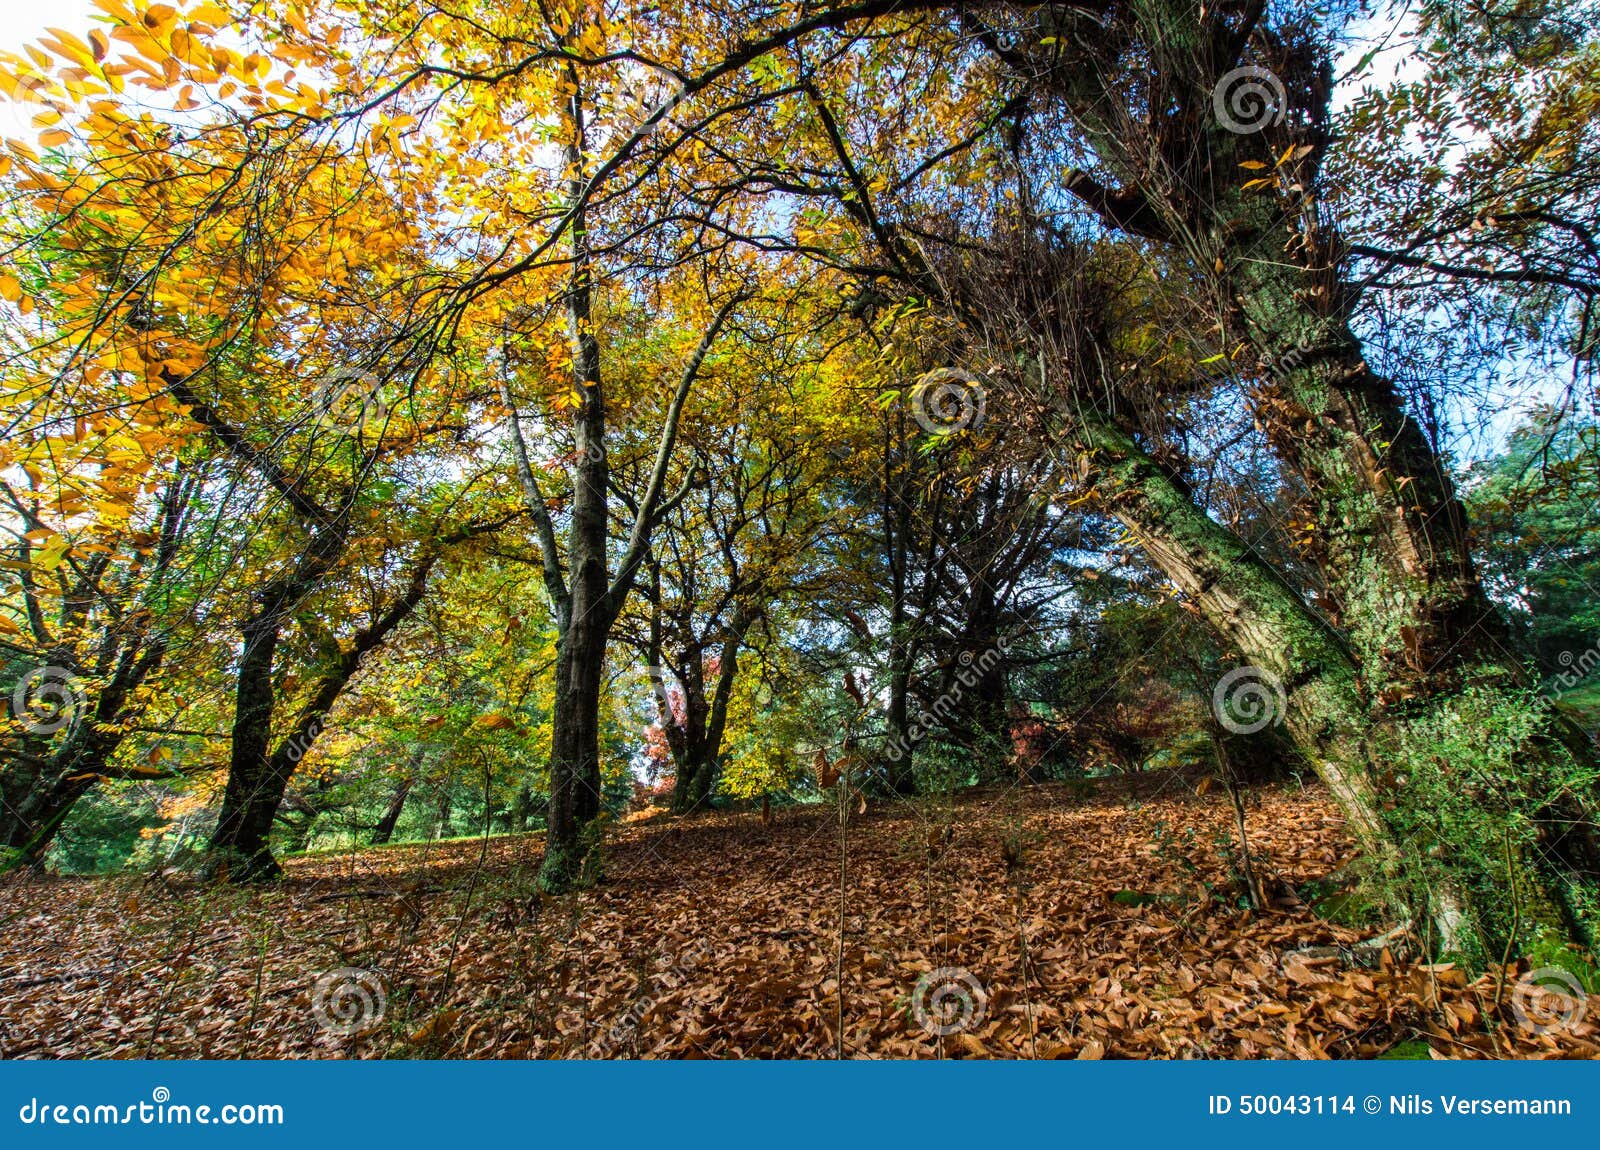 golden autumn leaves in the dandenong ranges